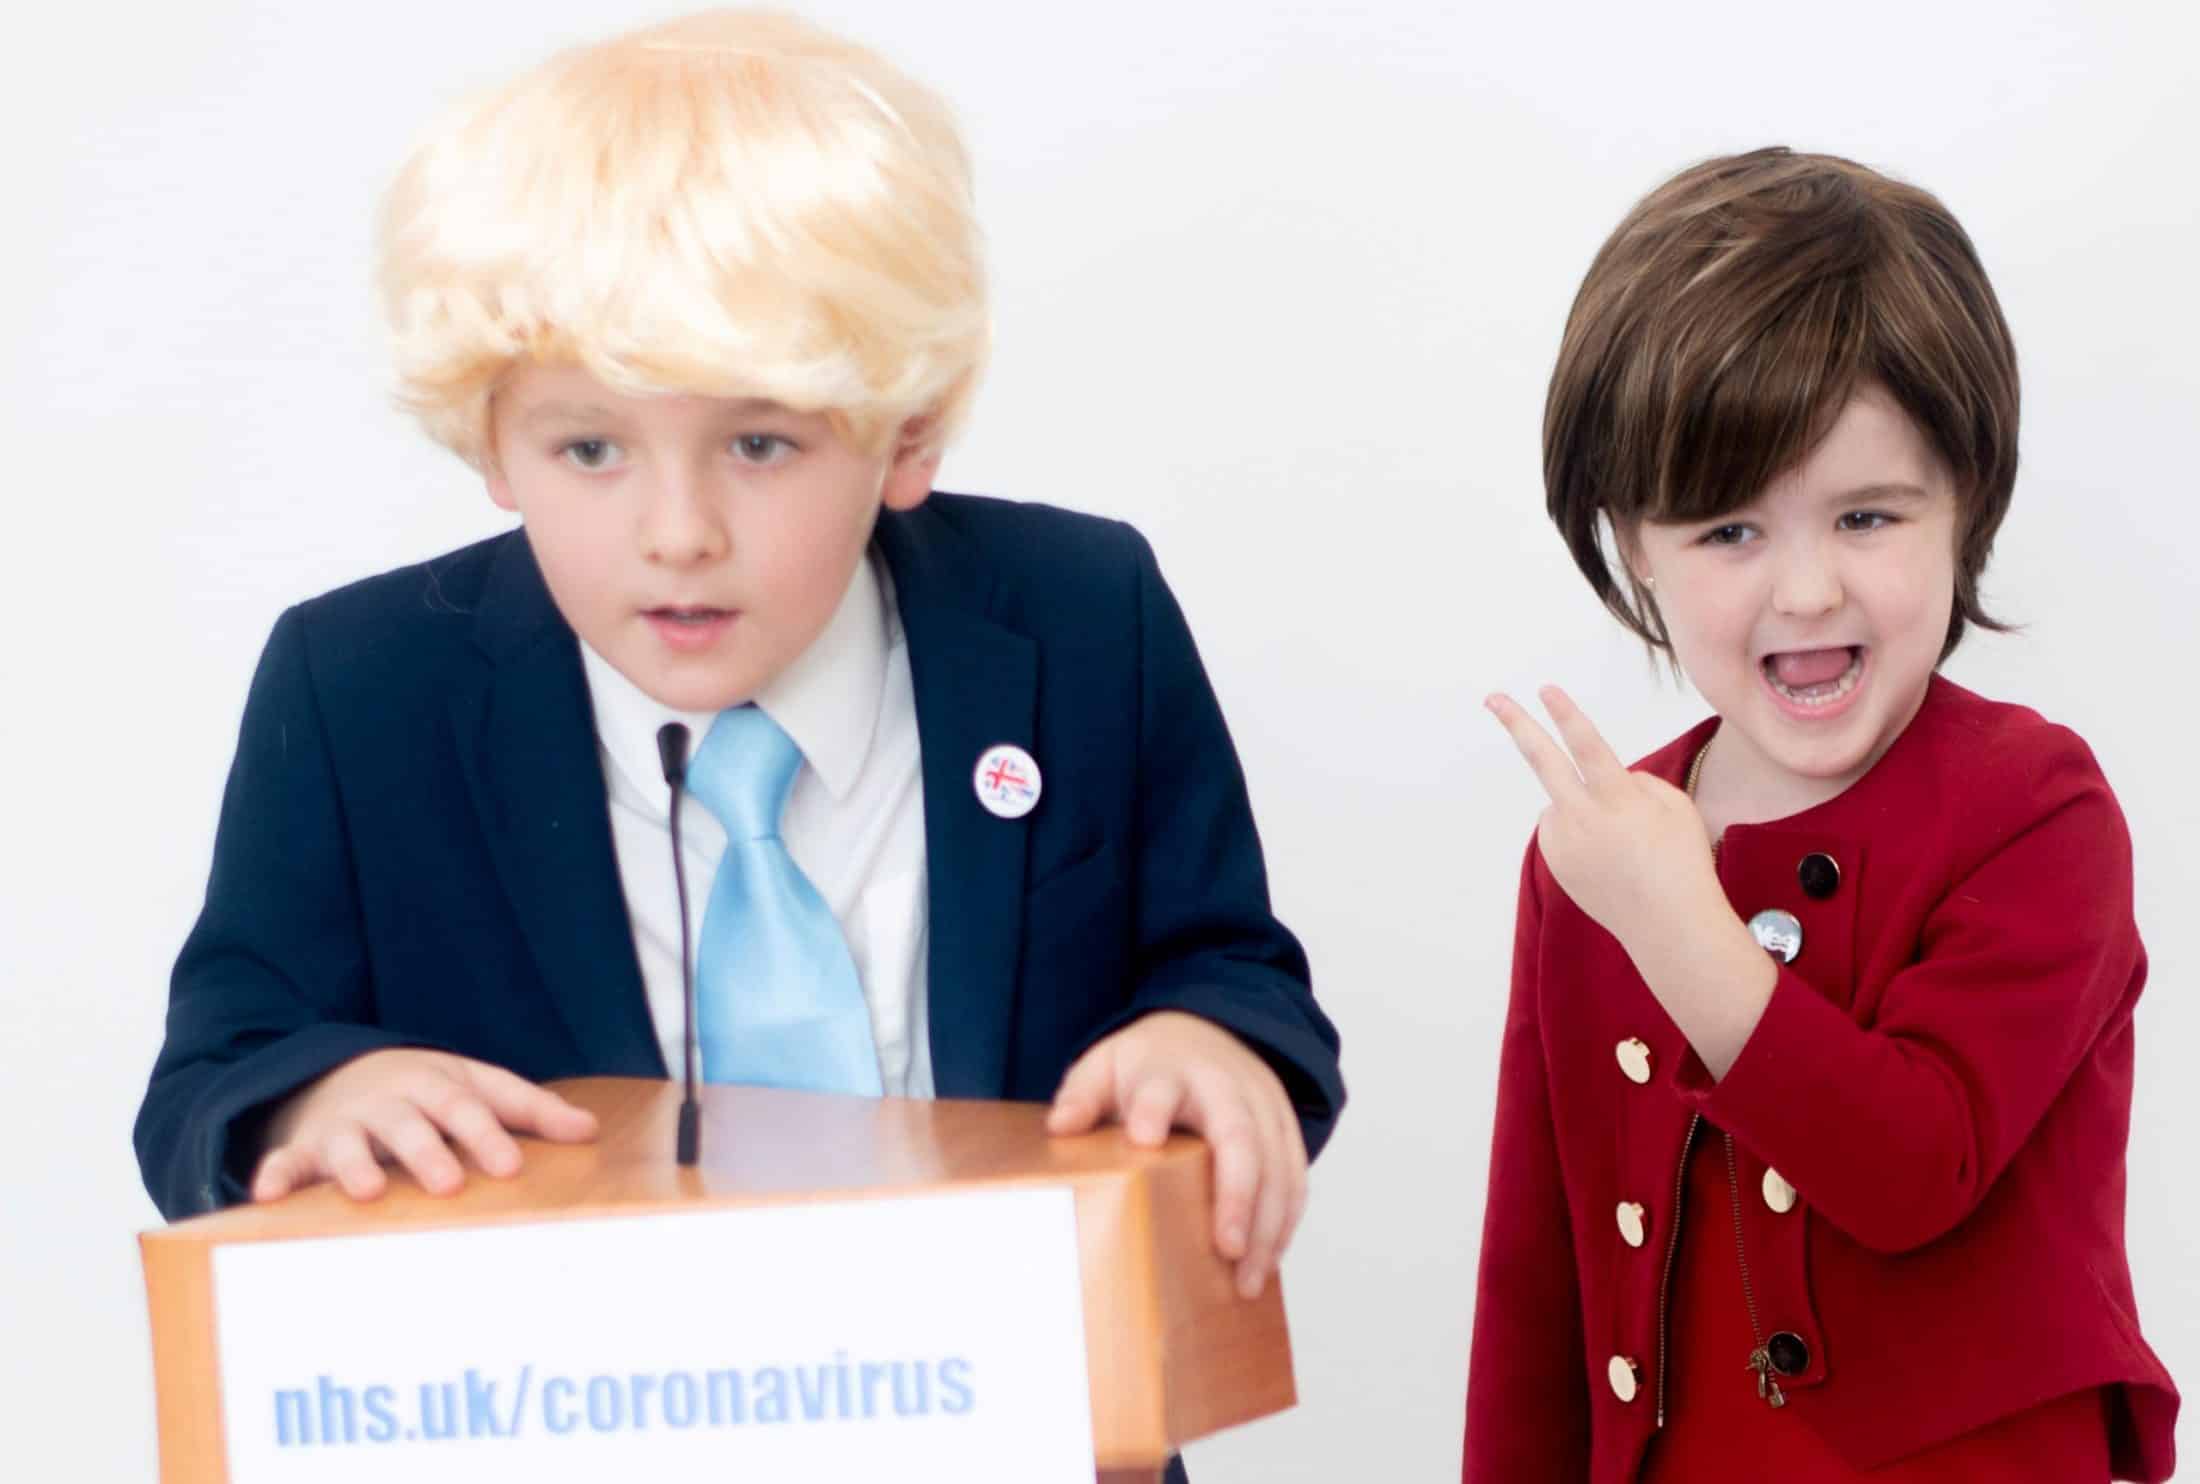 Mum dresses up her kids for Halloween as Nicola Sturgeon and Boris Johnson